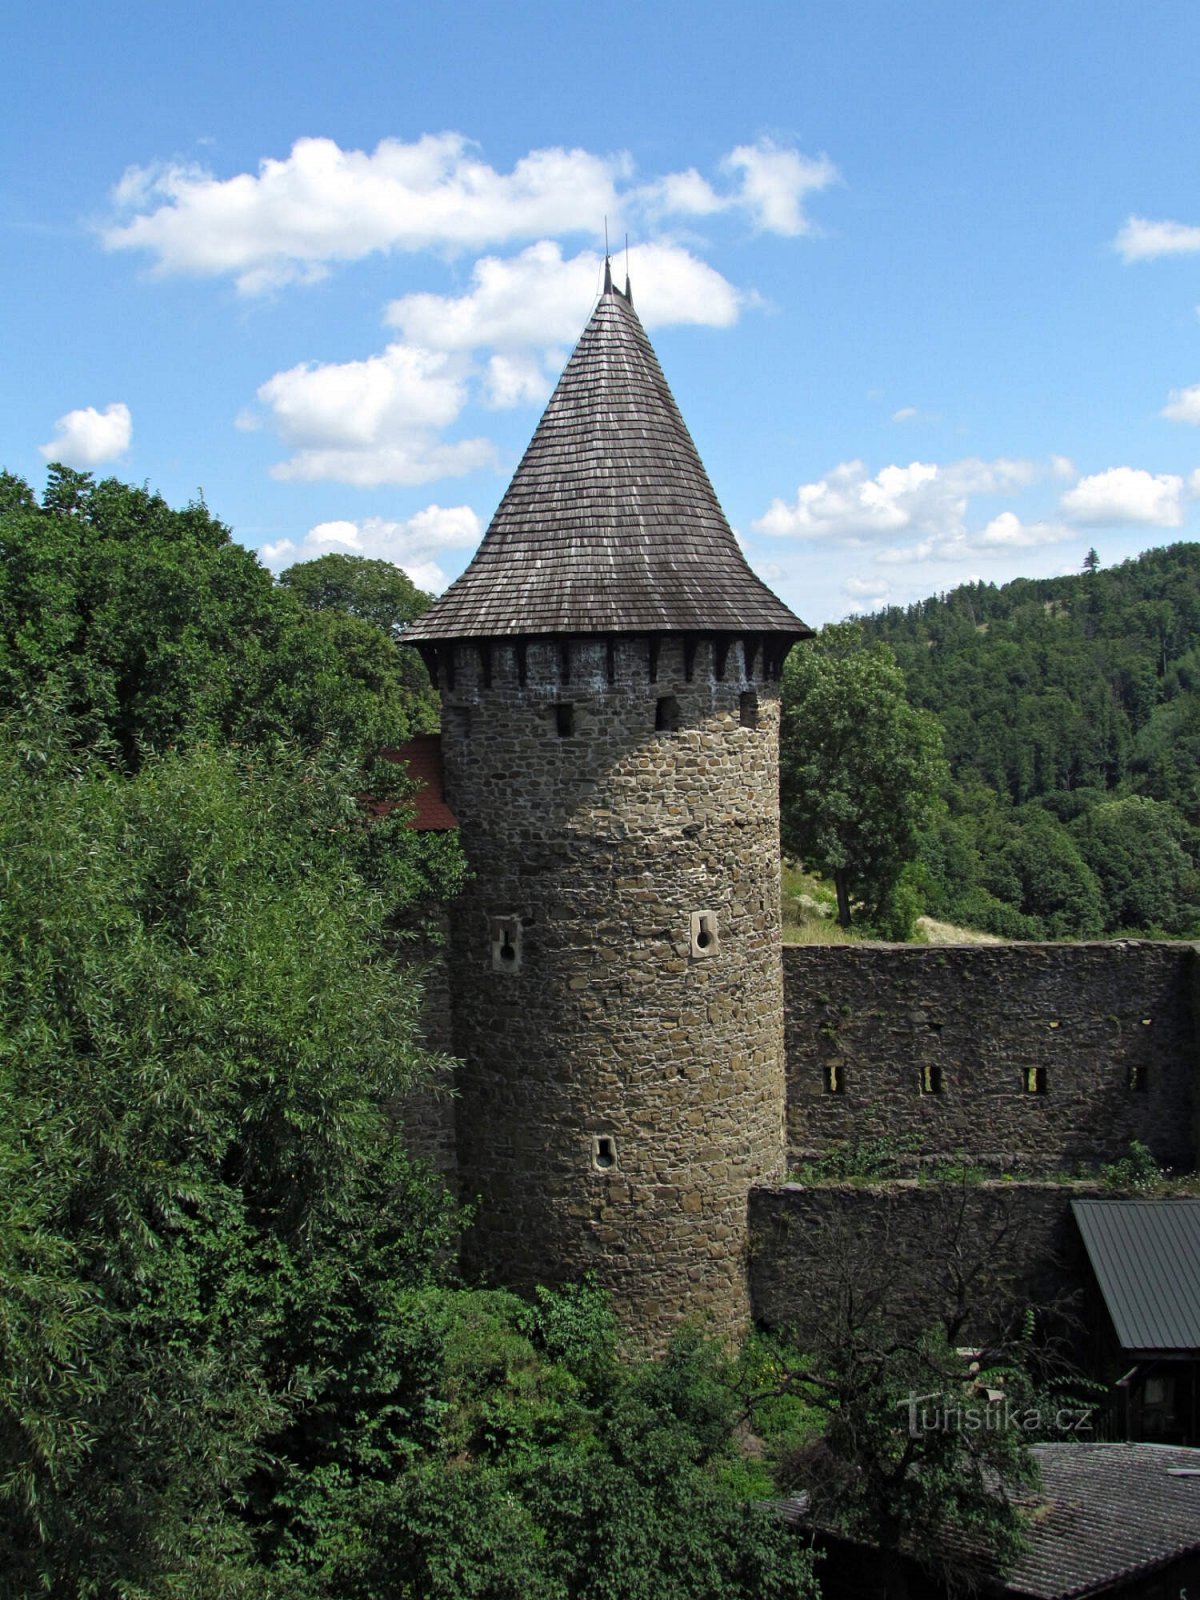 Visite du château d'Helfštýn